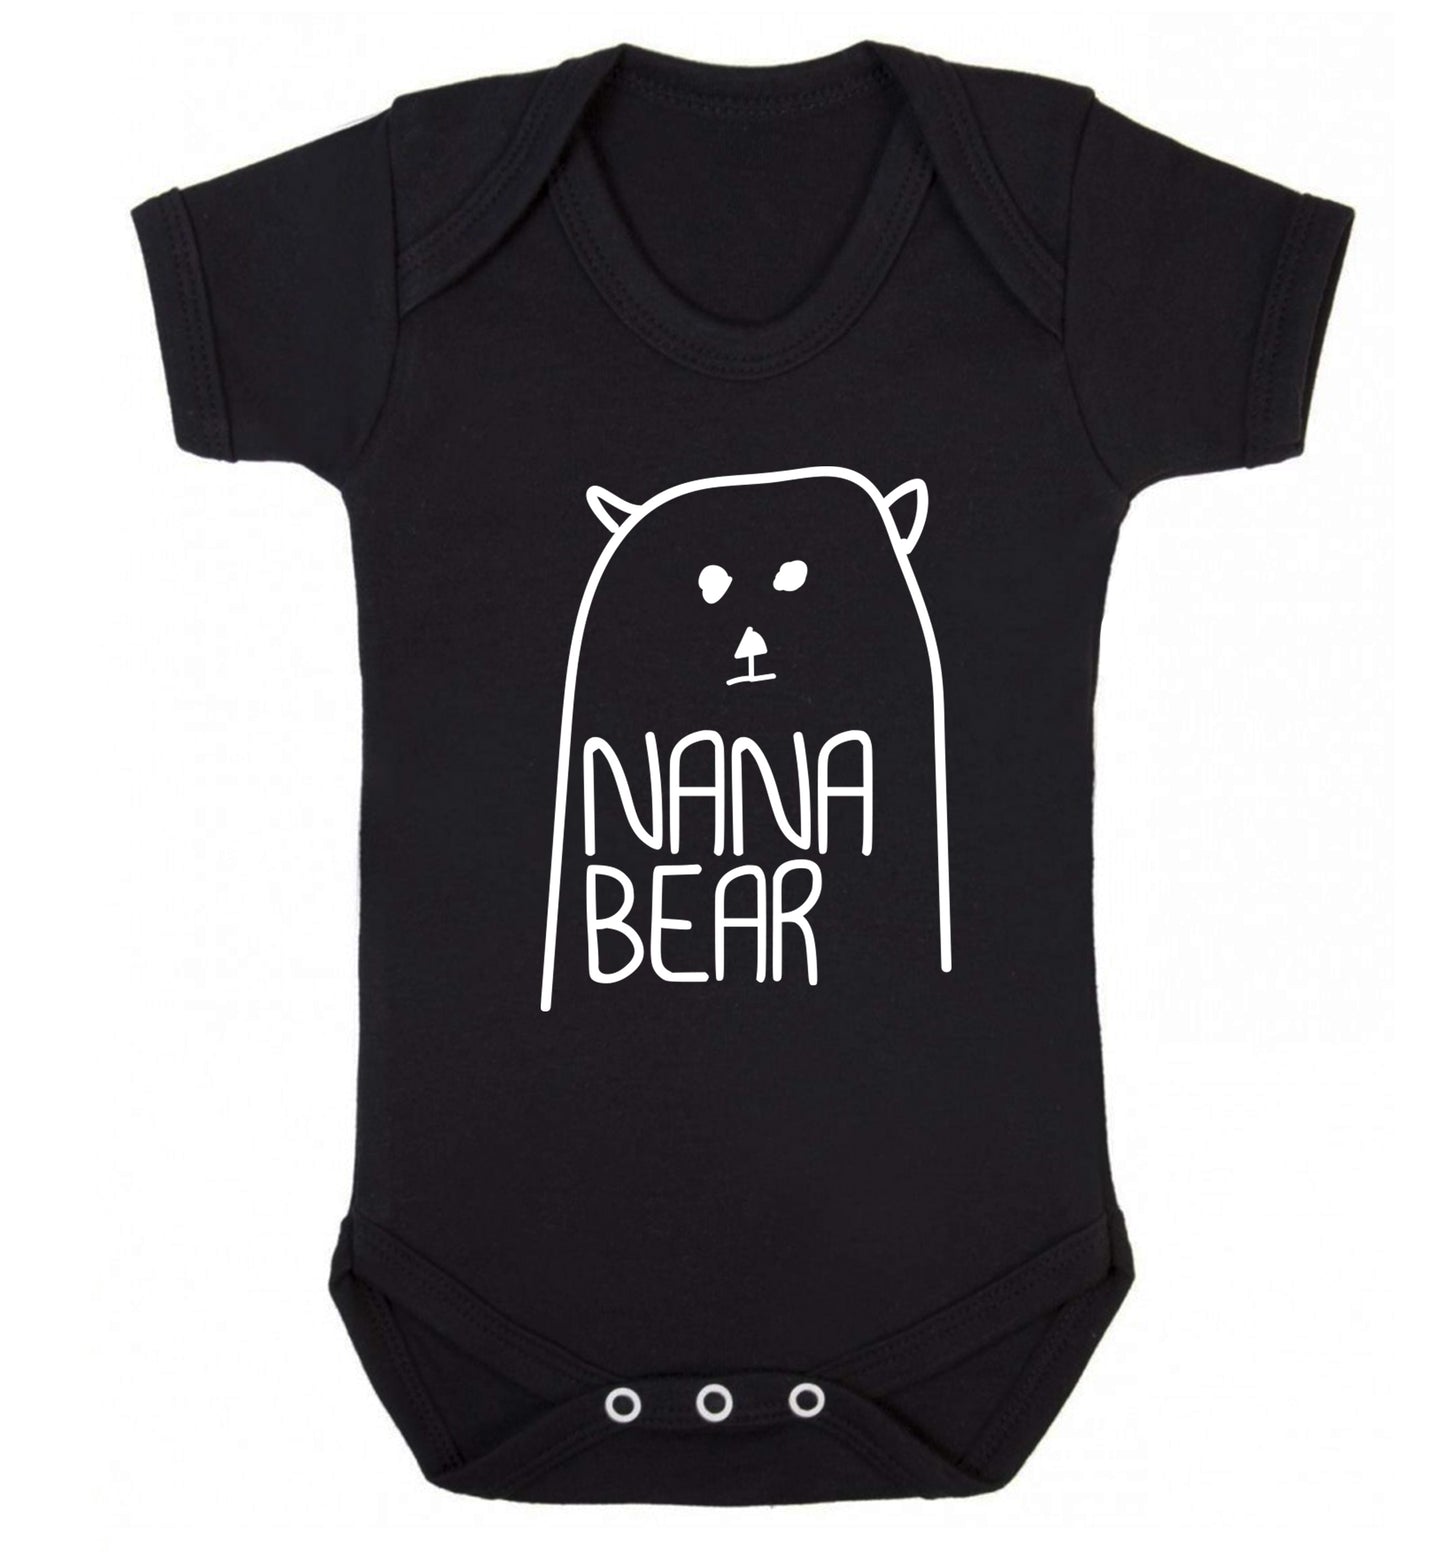 Nana bear Baby Vest black 18-24 months